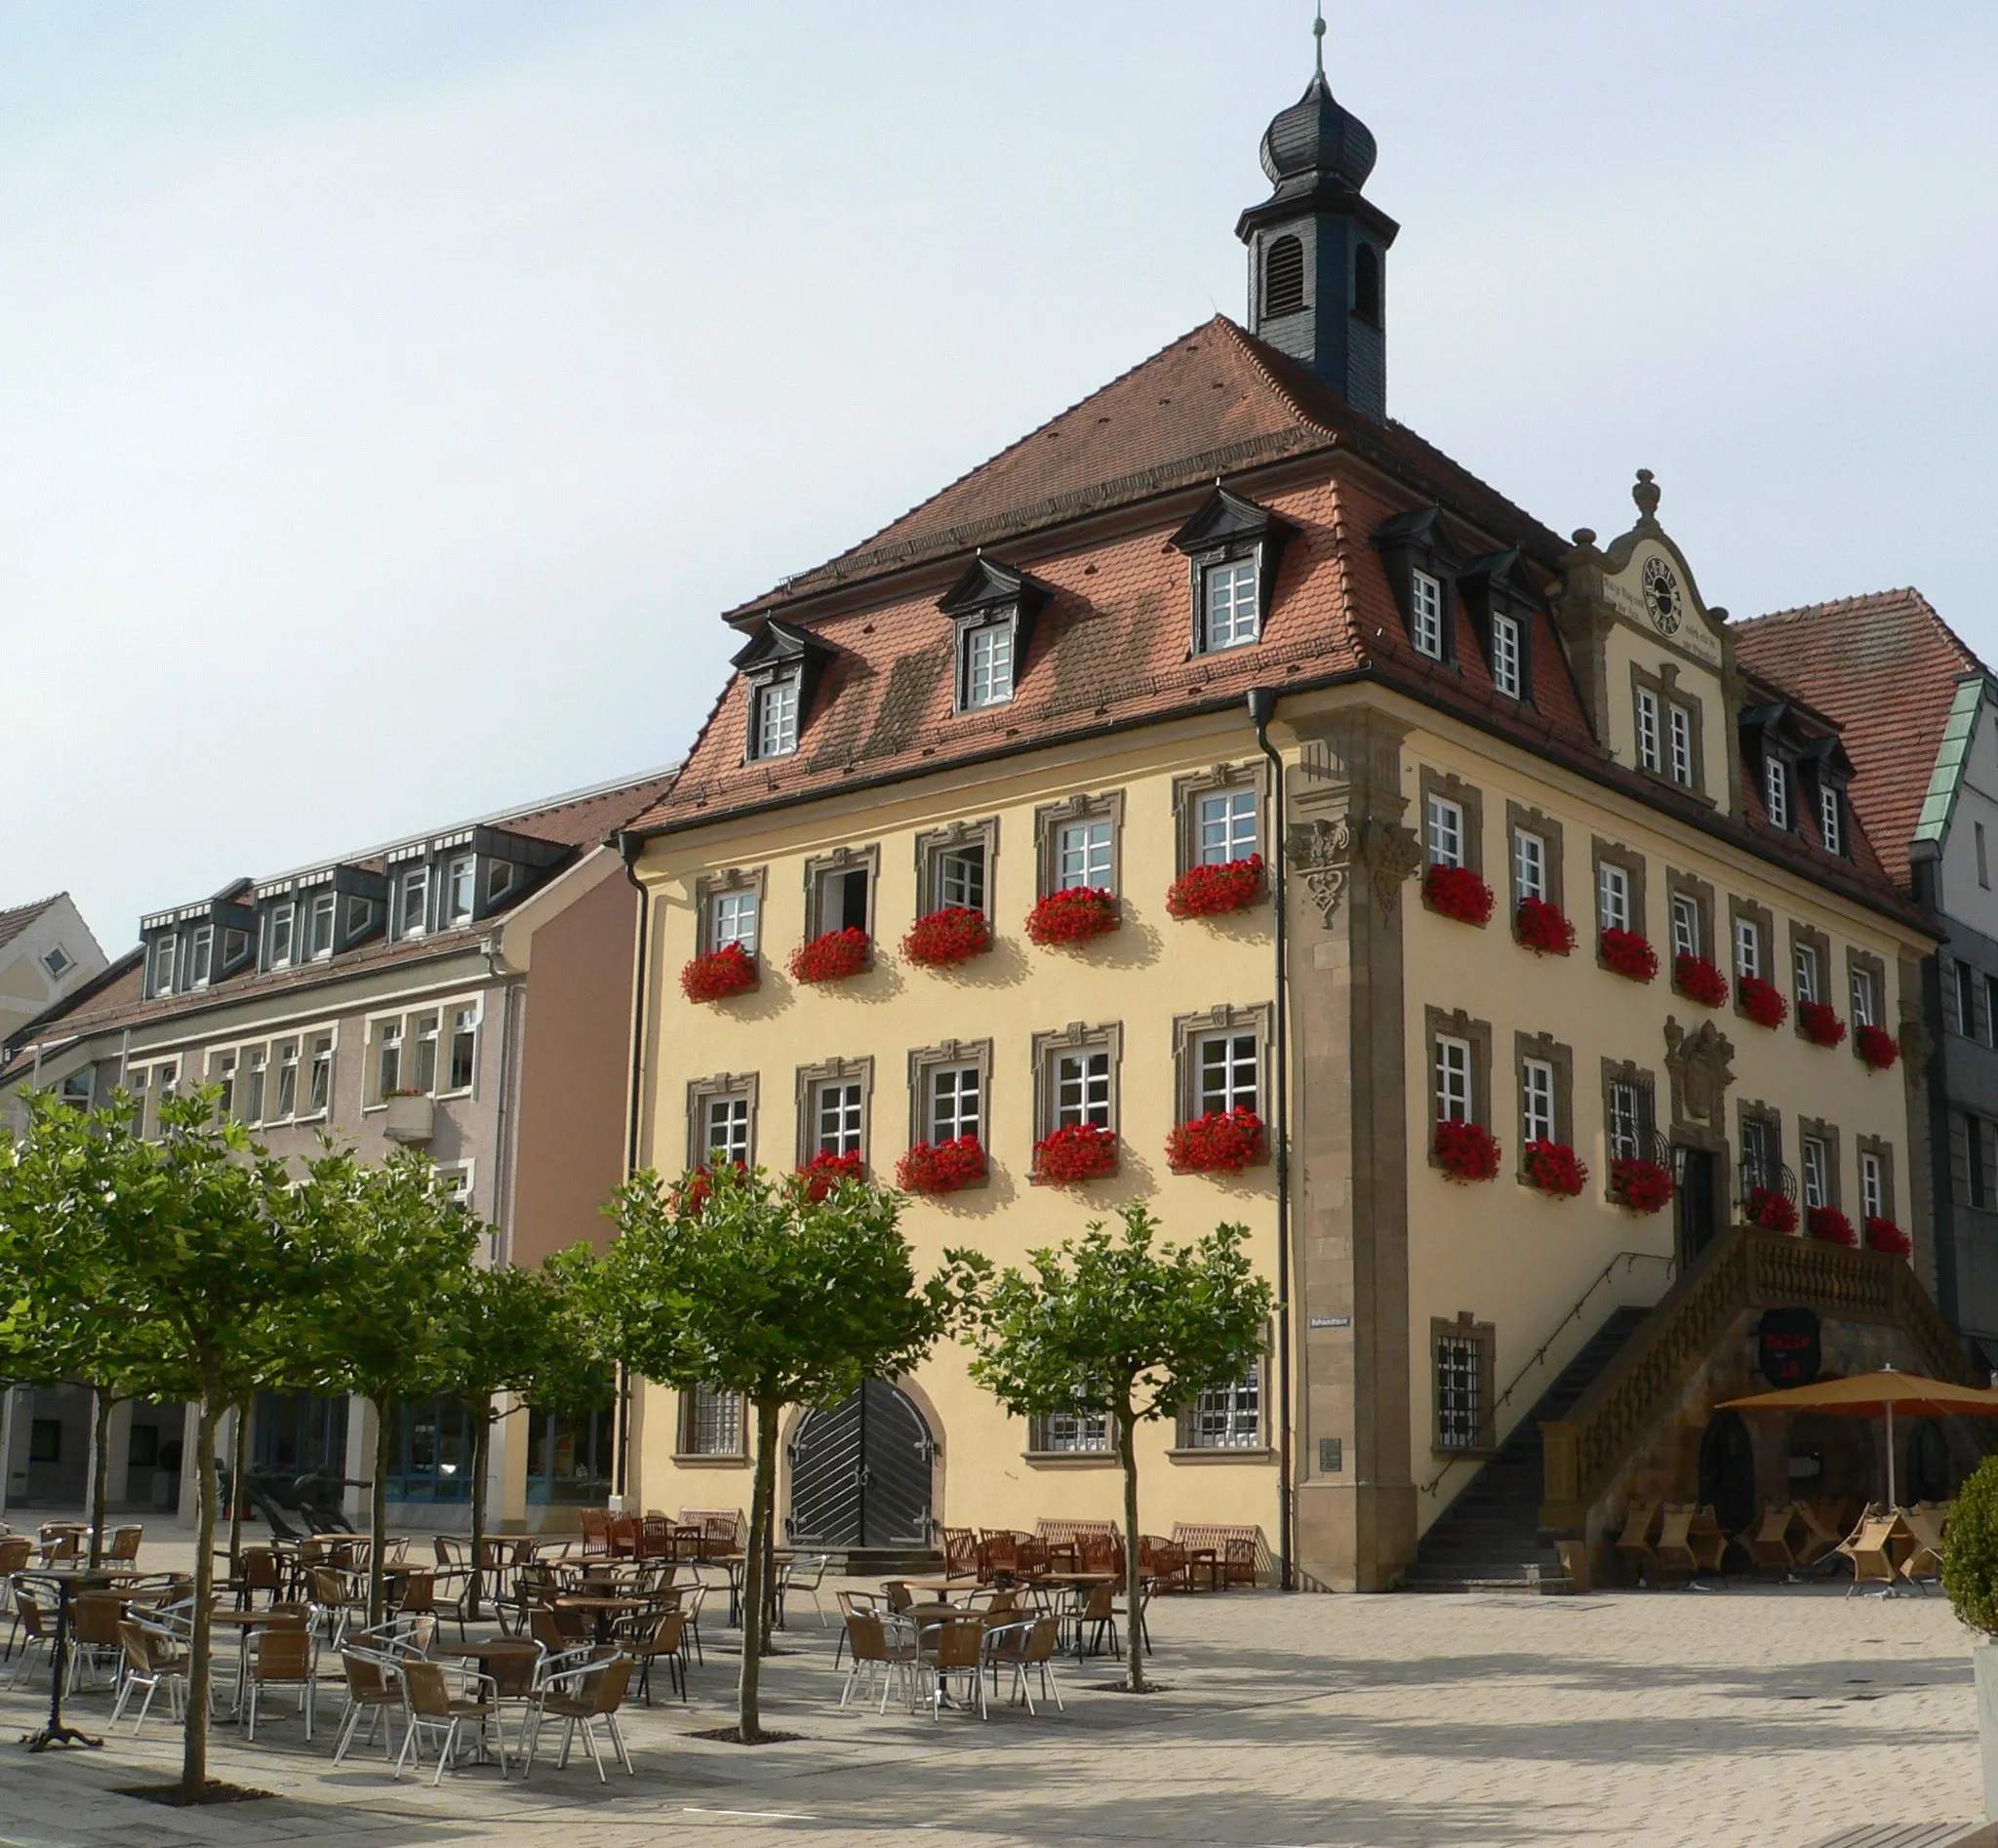 Image of Neckarsulm